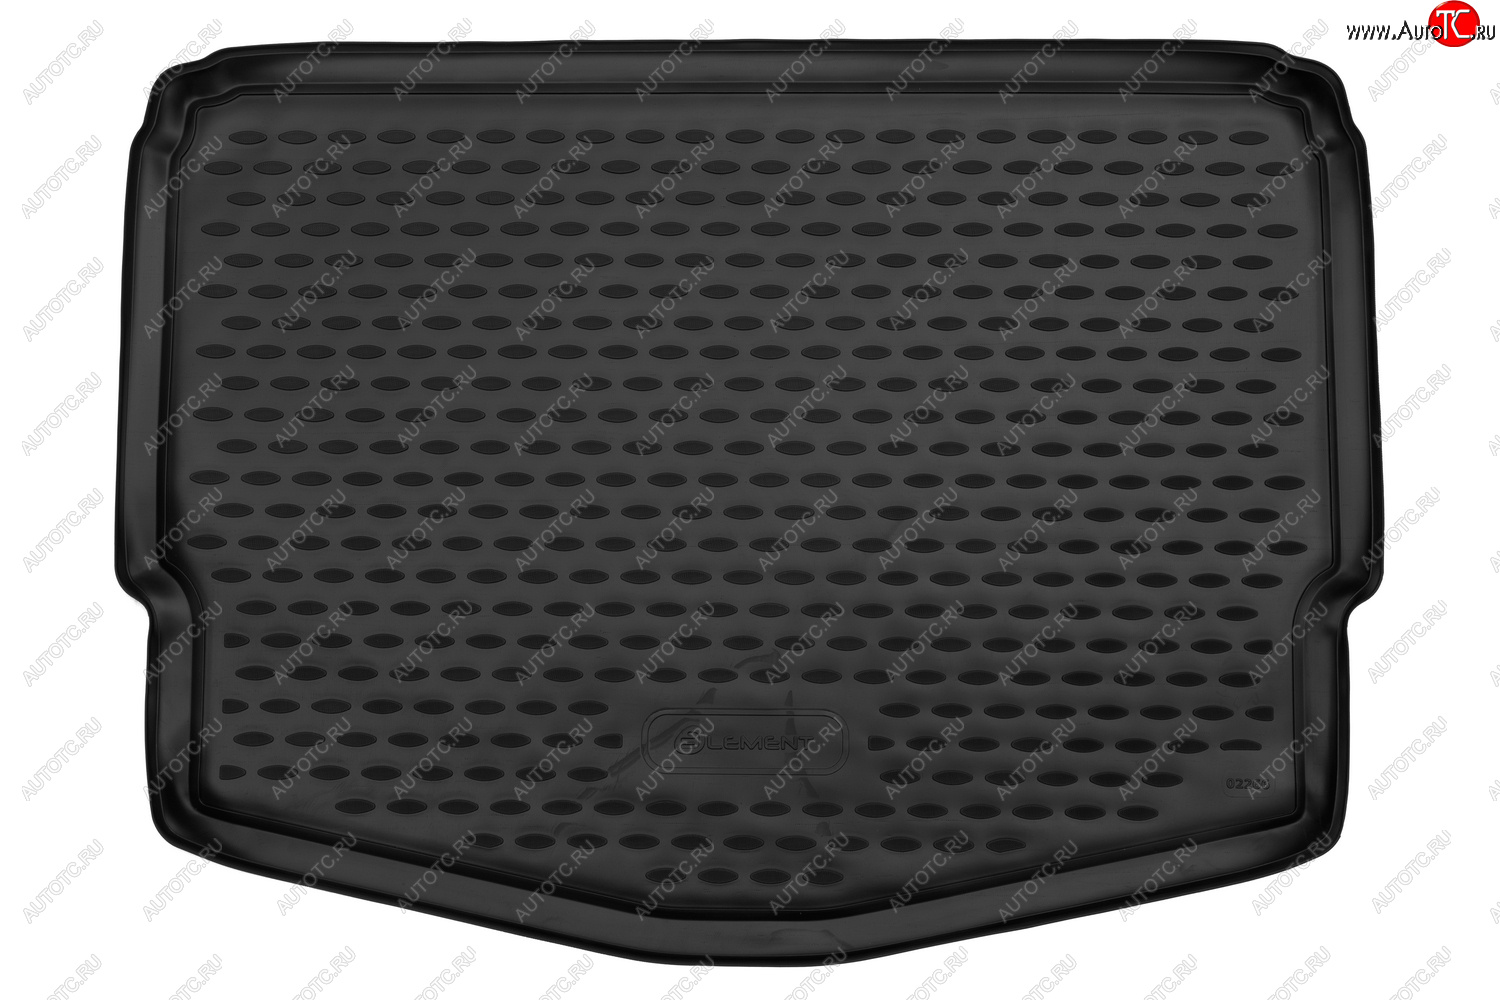 1 539 р. Коврик багажника Element (полиуретан)  Nissan Note  2 (2012-2016) (Черный)